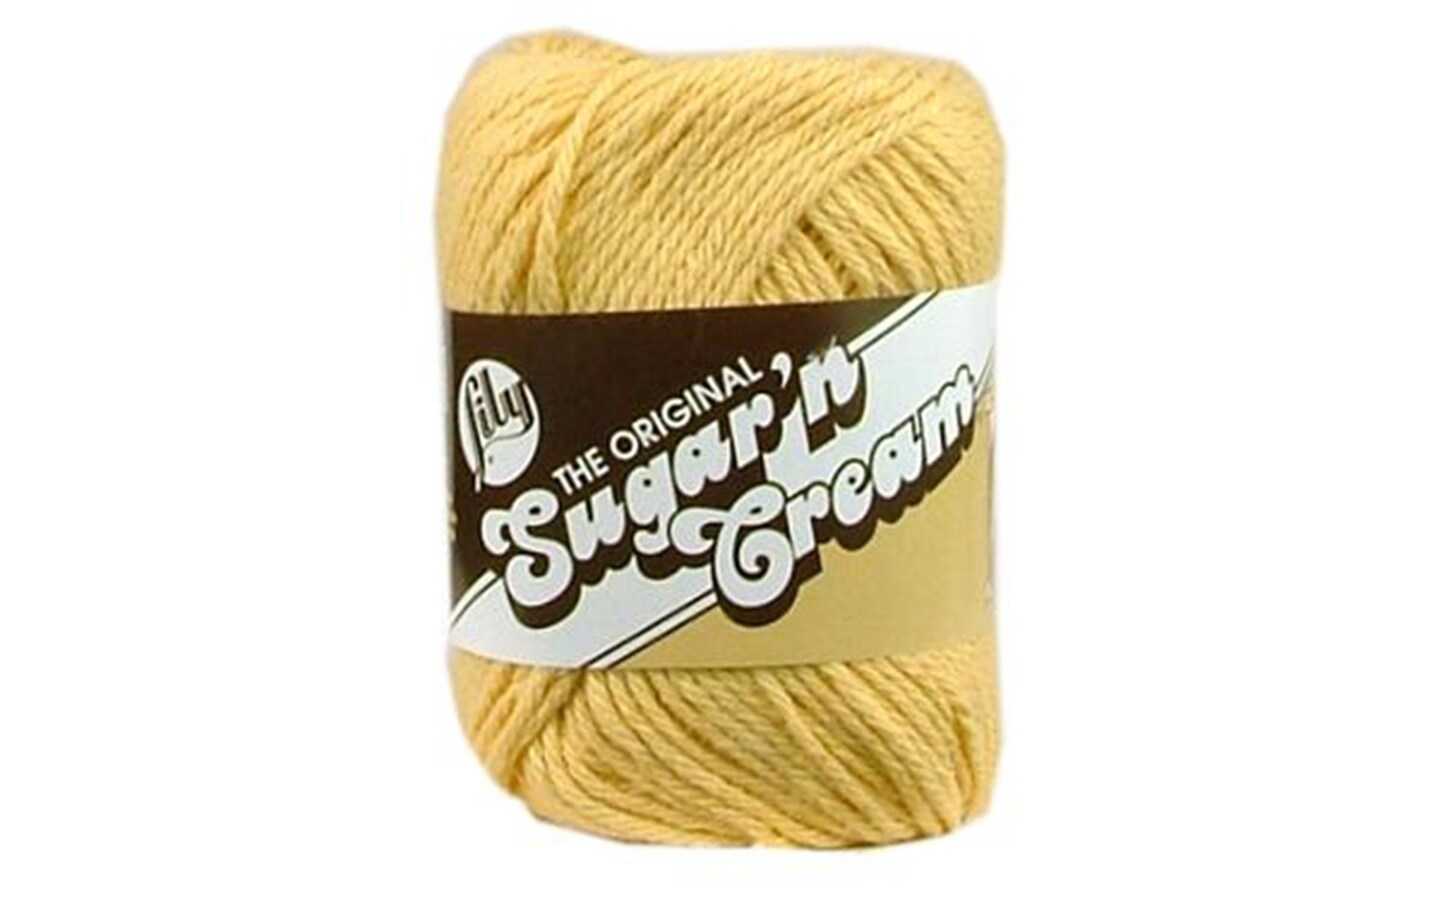 Sugar 'n Cream Cotton Yarn - Country Yellow